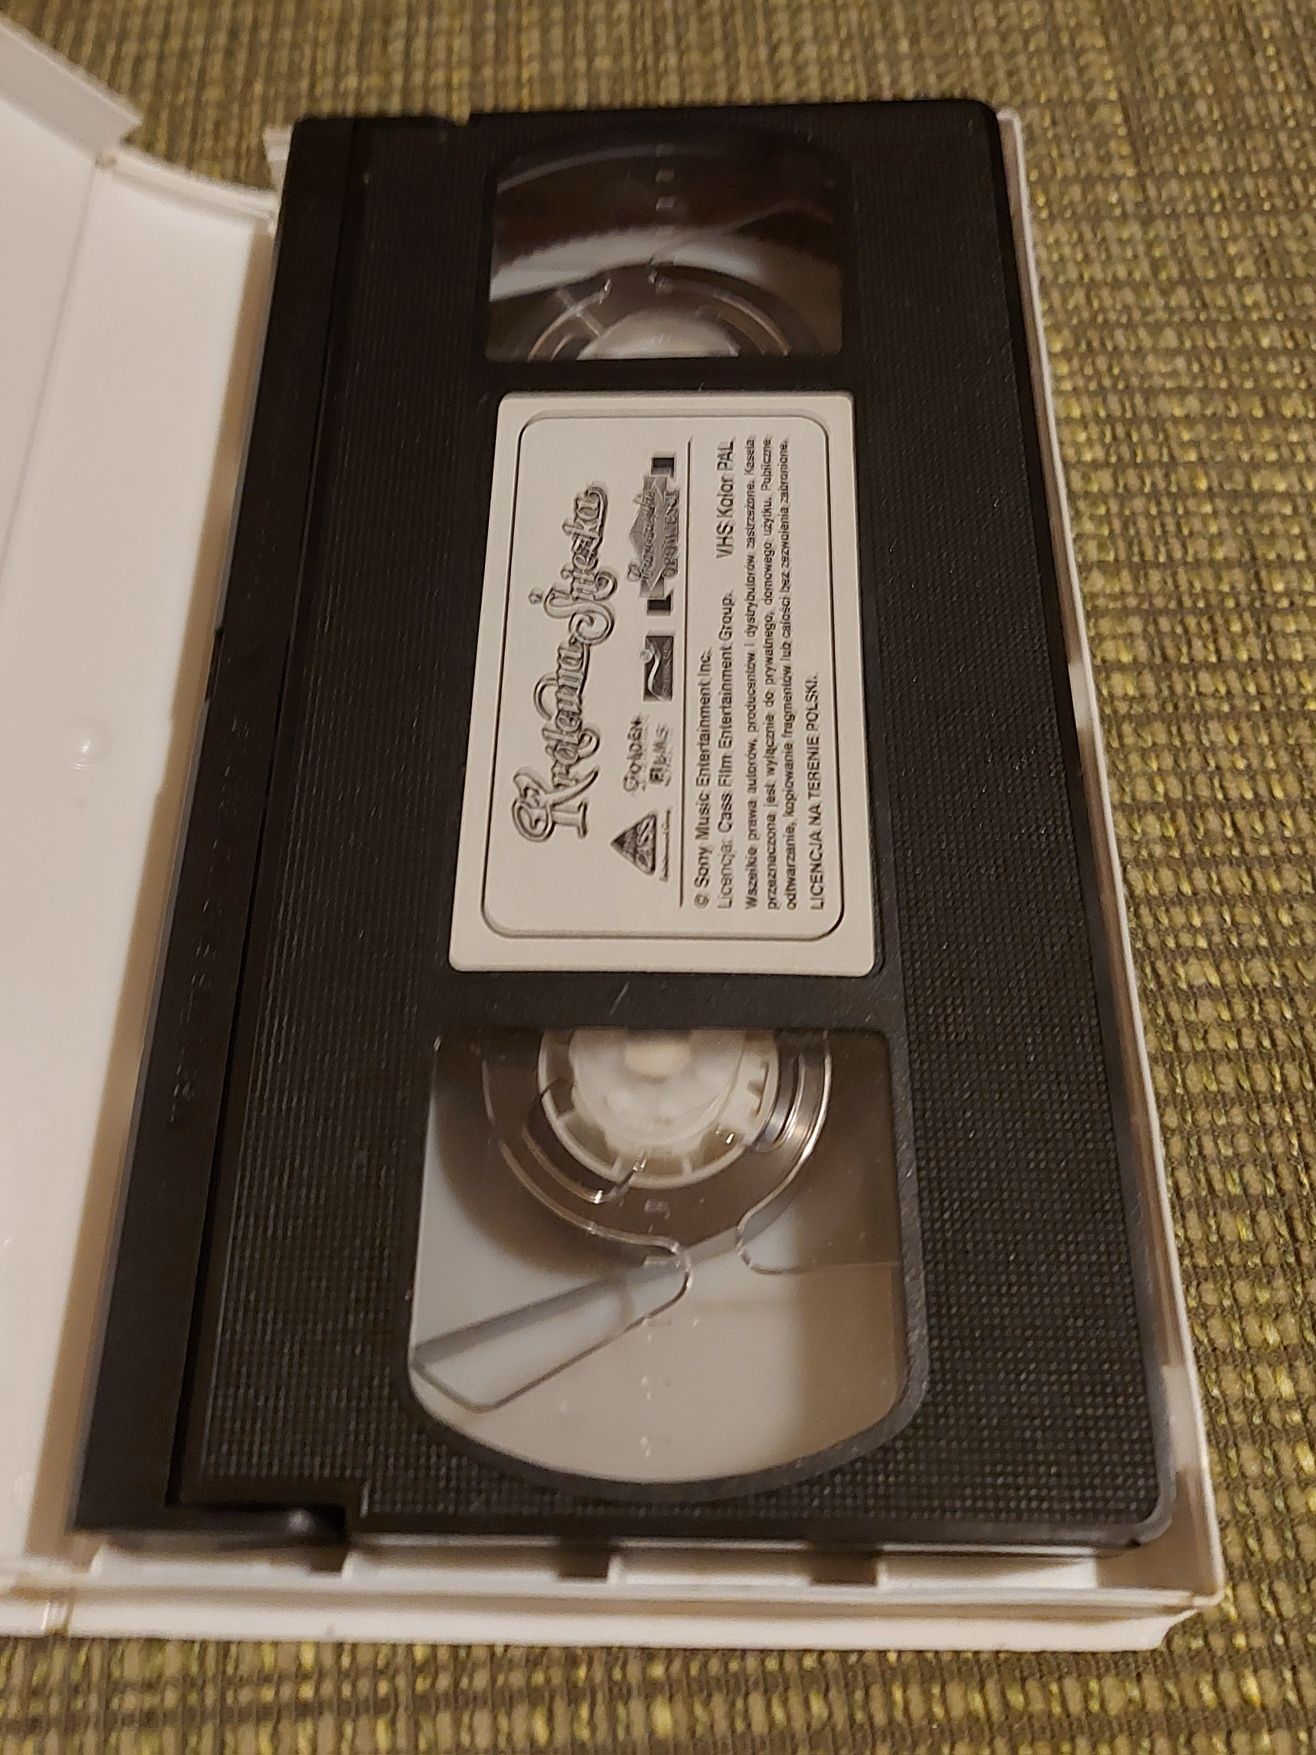 Kaseta VHS z filmem "Królewna Śnieżka"